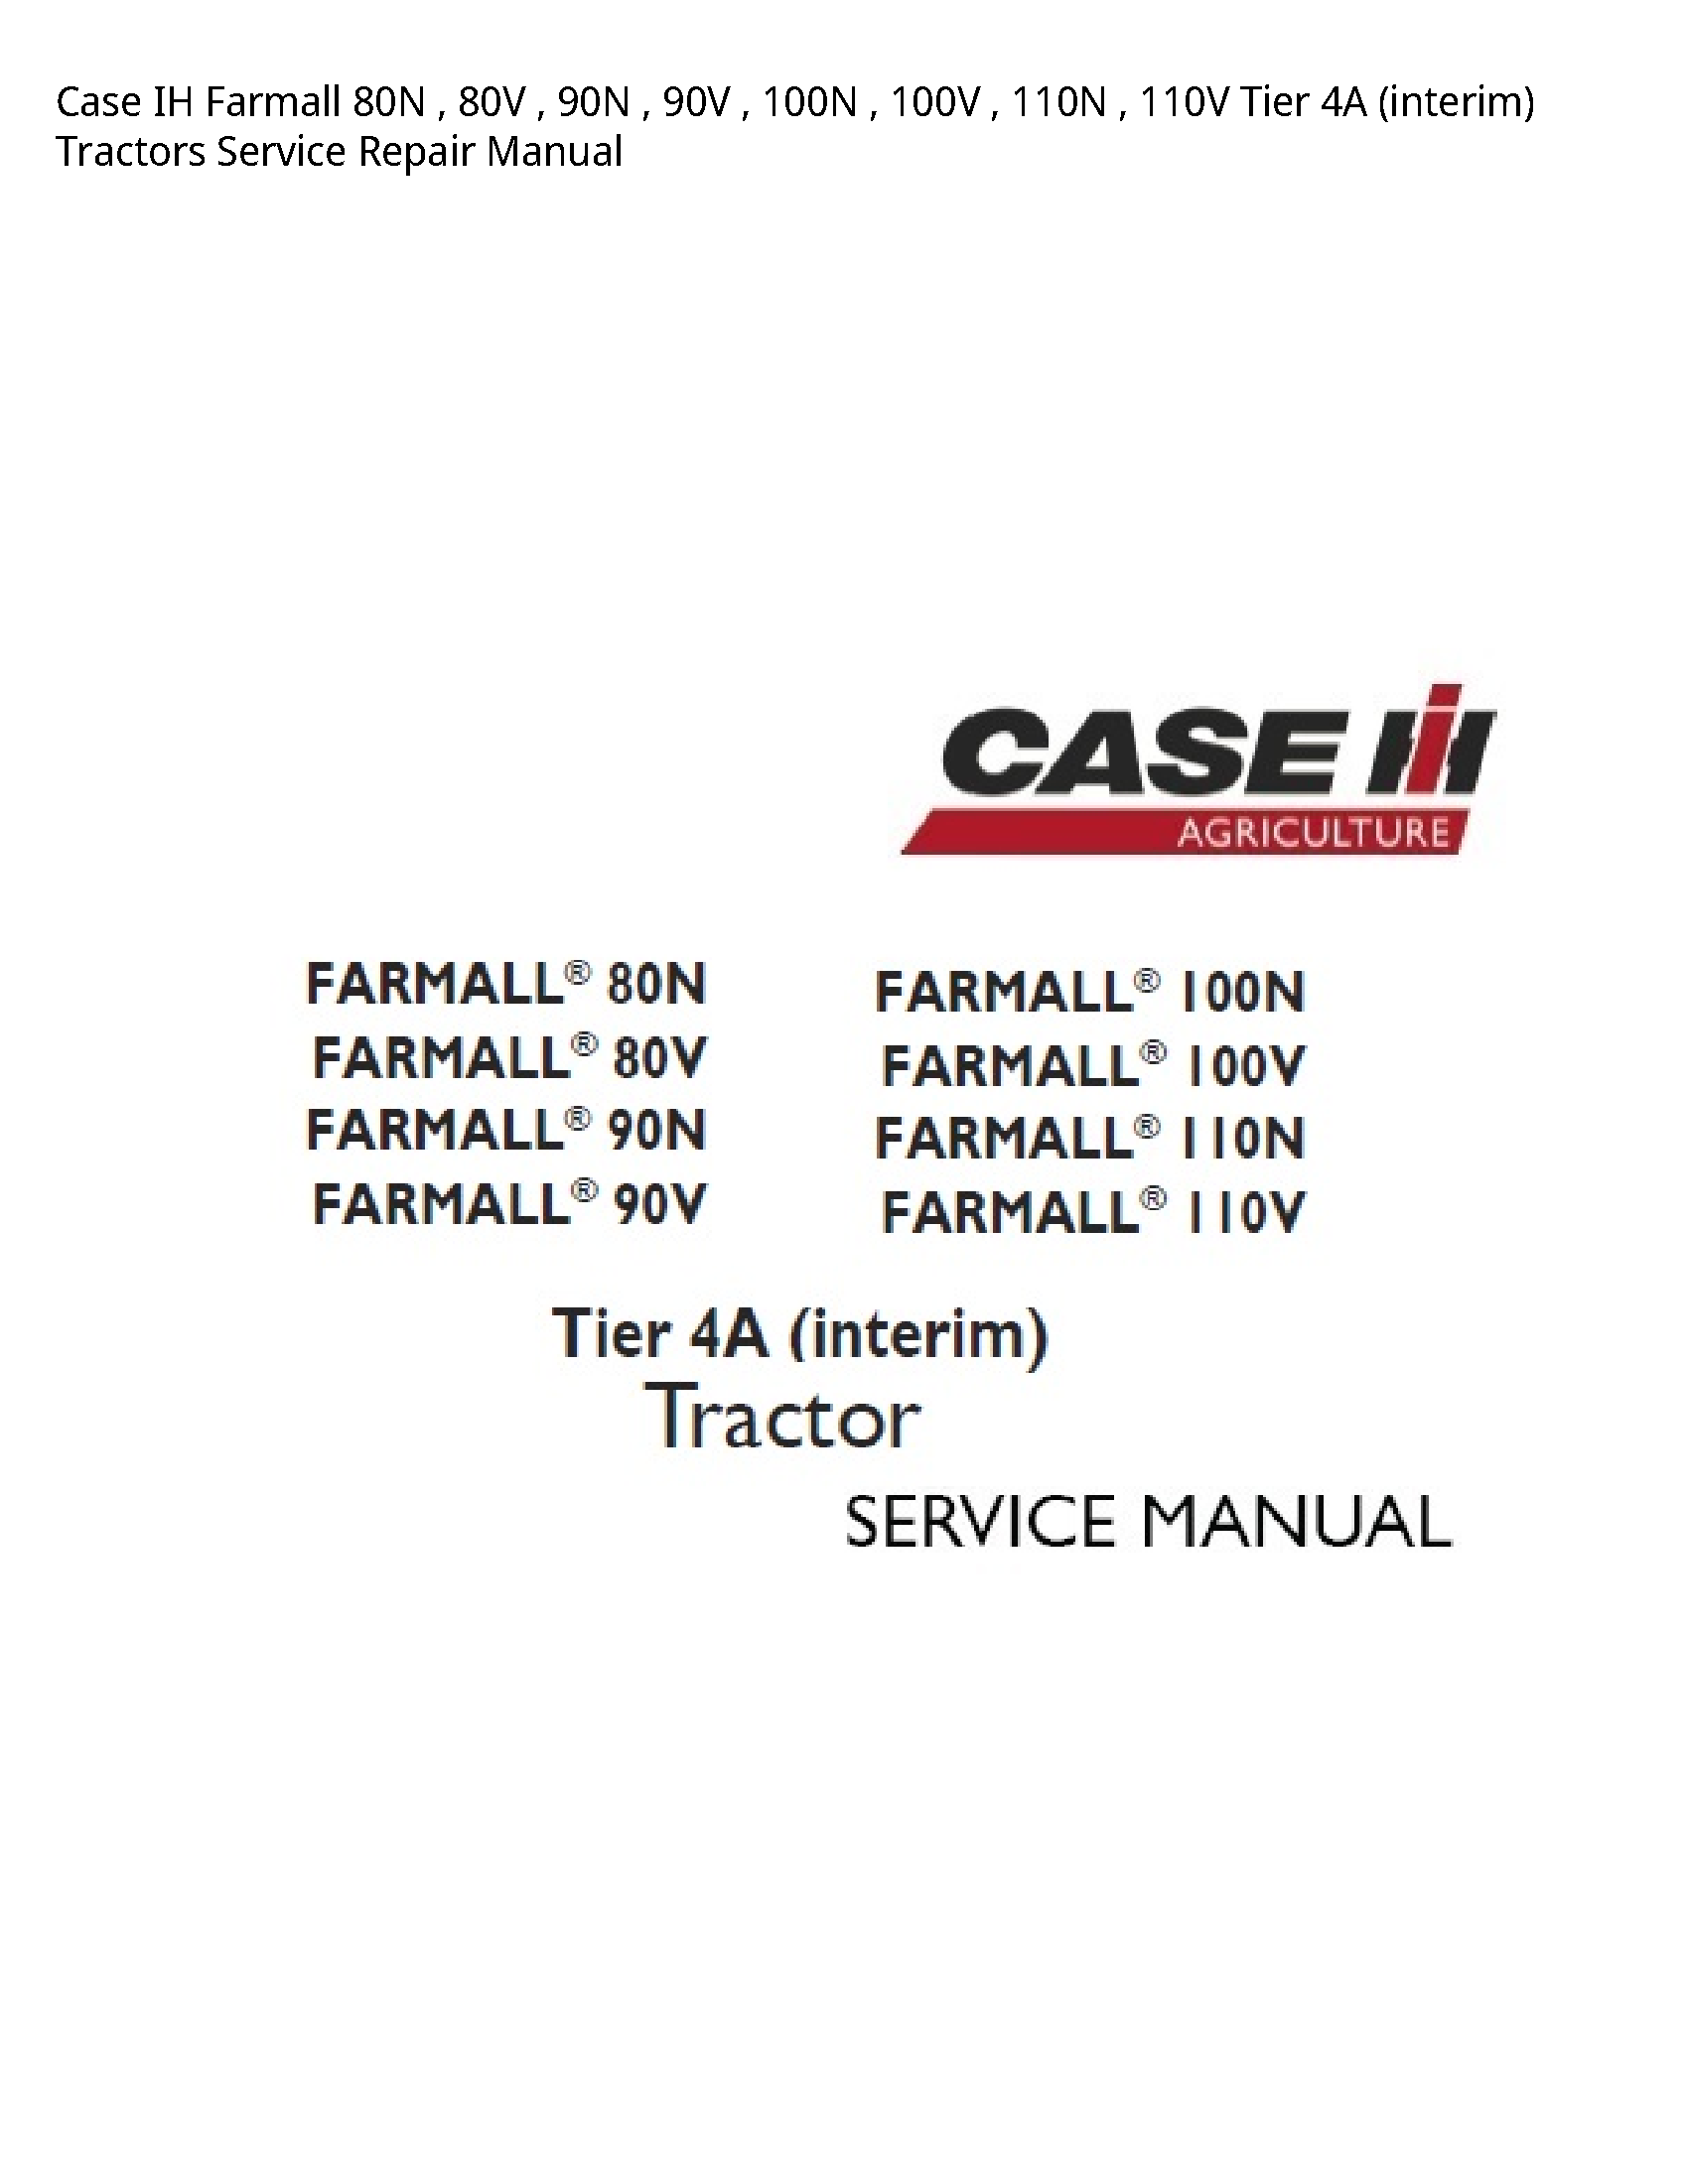 Case/Case IH 80N IH Farmall Tier (interim) Tractors manual